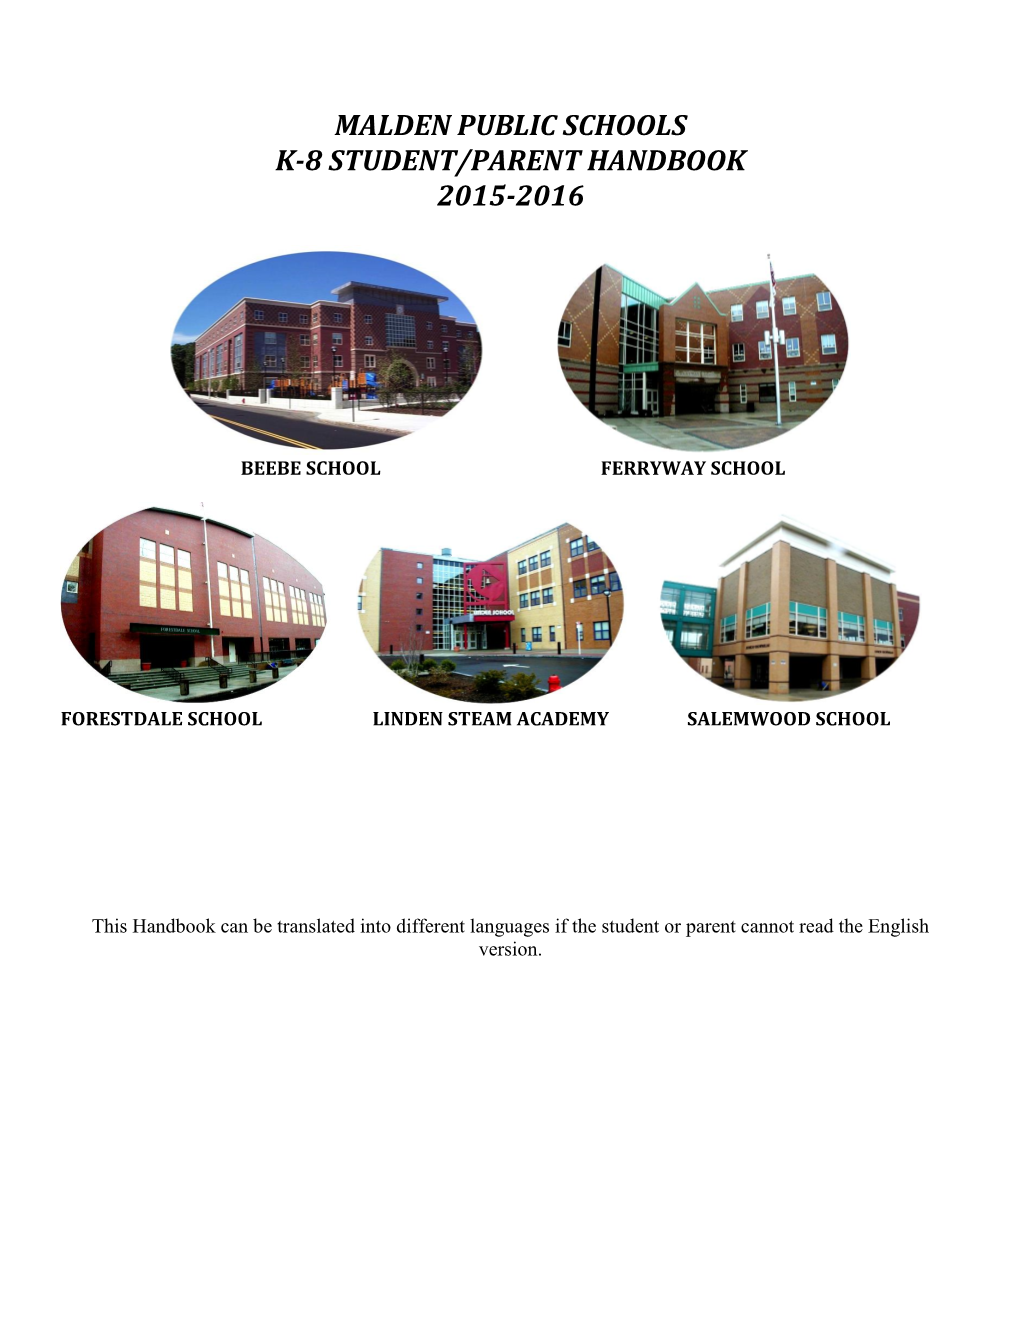 Malden Public Schools K-8 Student/Parent Handbook 2015-2016